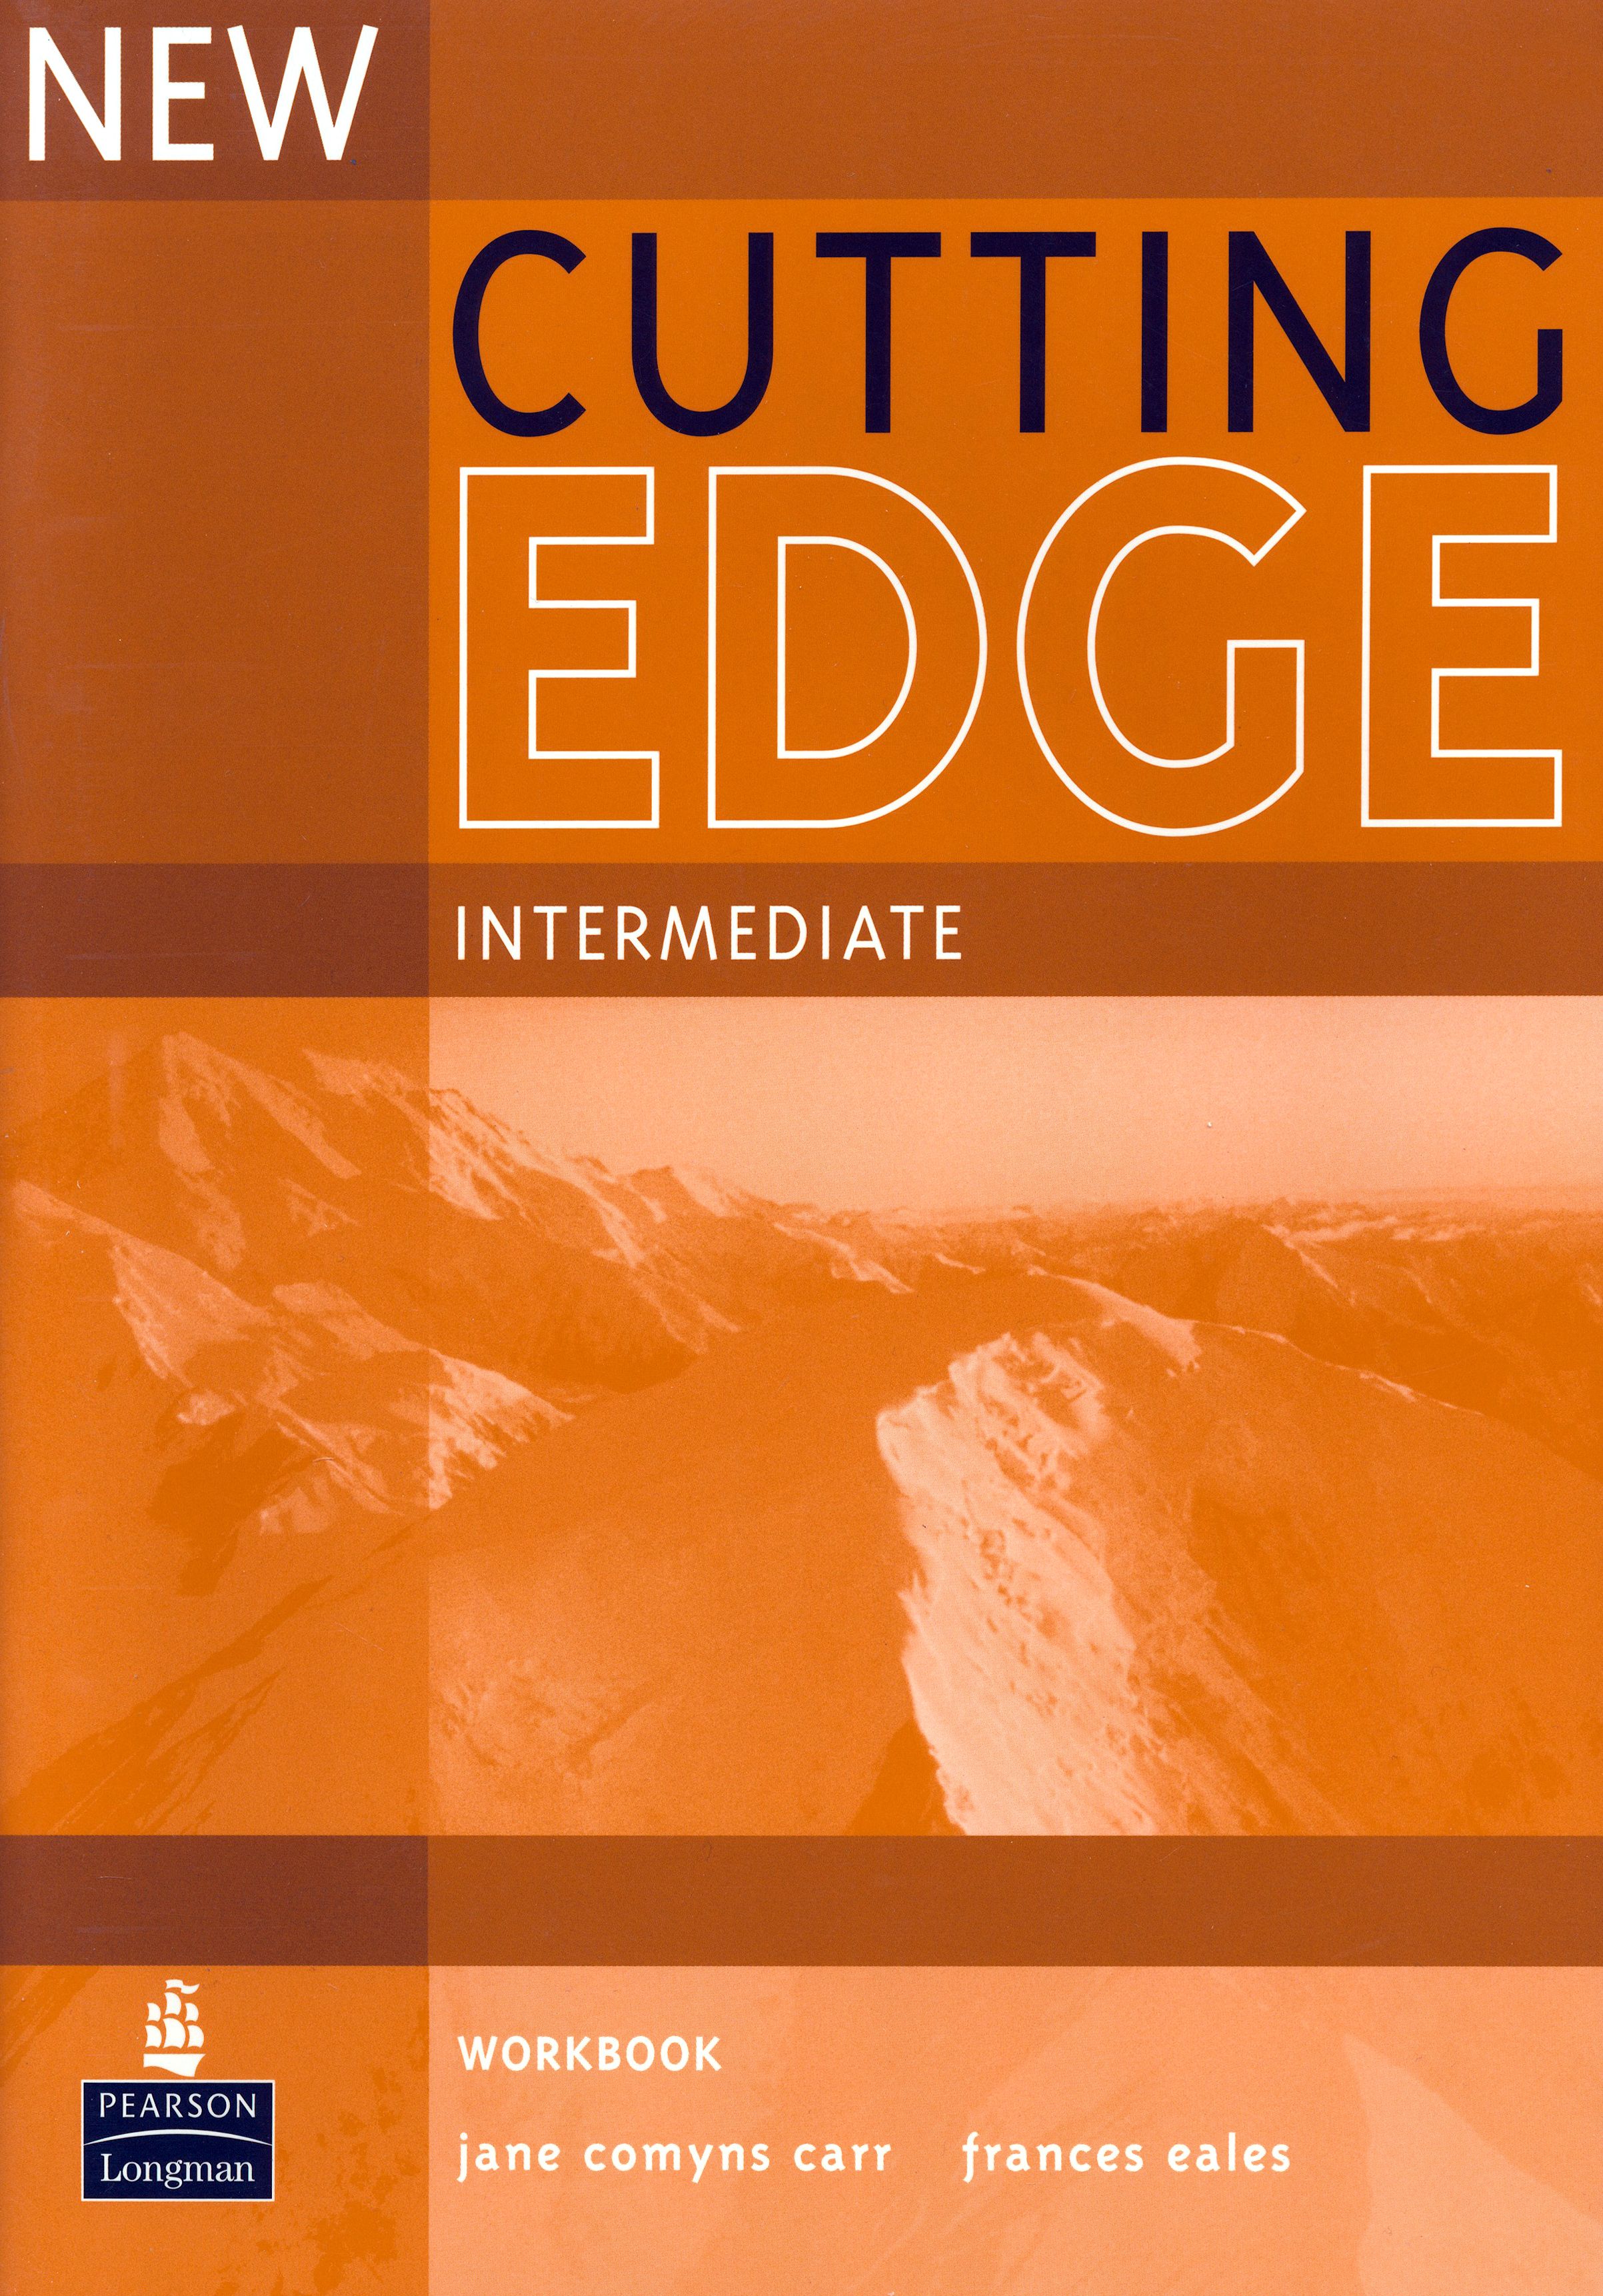 New cutting edge intermediate. Cutting Edge Intermediate 2005. New Cutting Edge Intermediate Workbook. Cutting Edge Intermediate 3rd Edition. Cutting Edge Intermediate Keys Workbook.